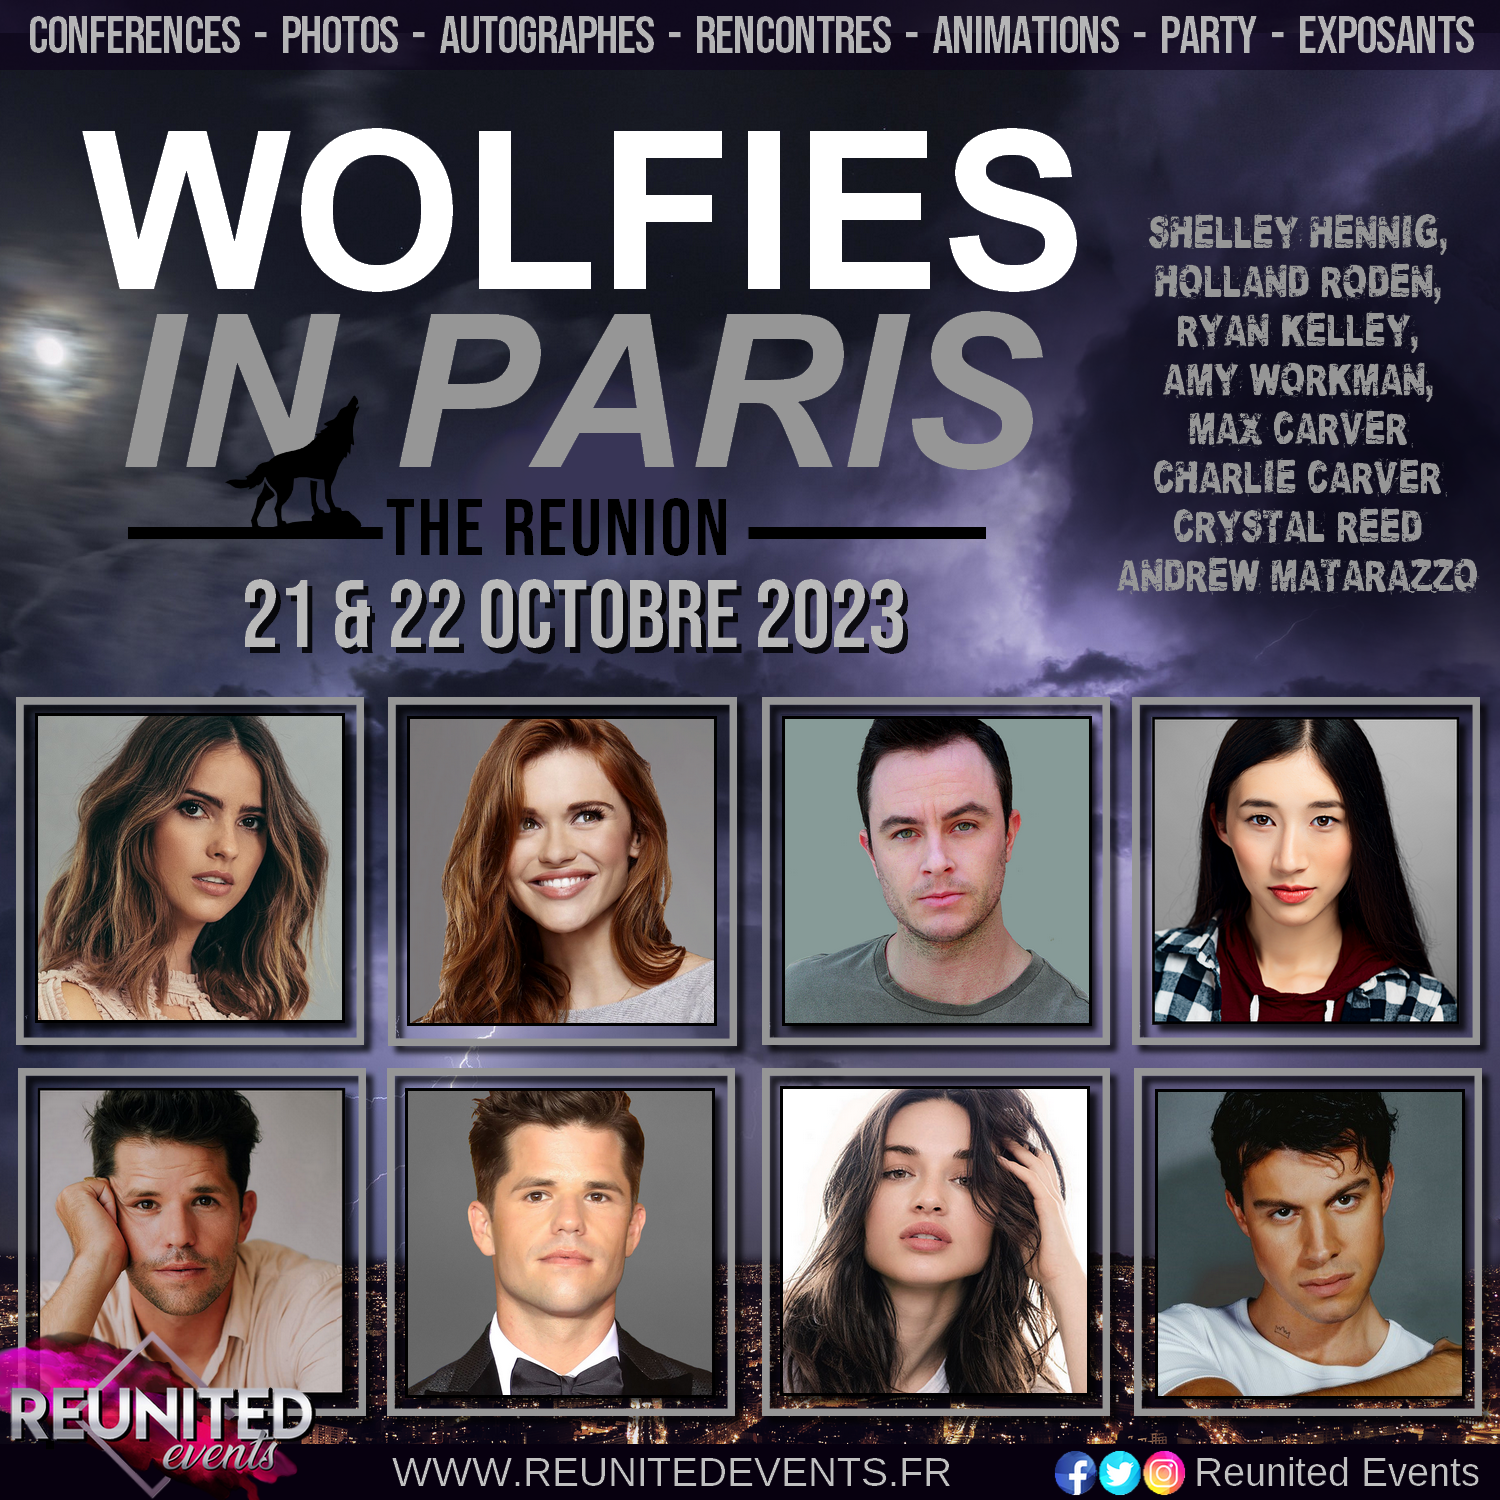 Wolfies in paris 8 teen wolf convention 1